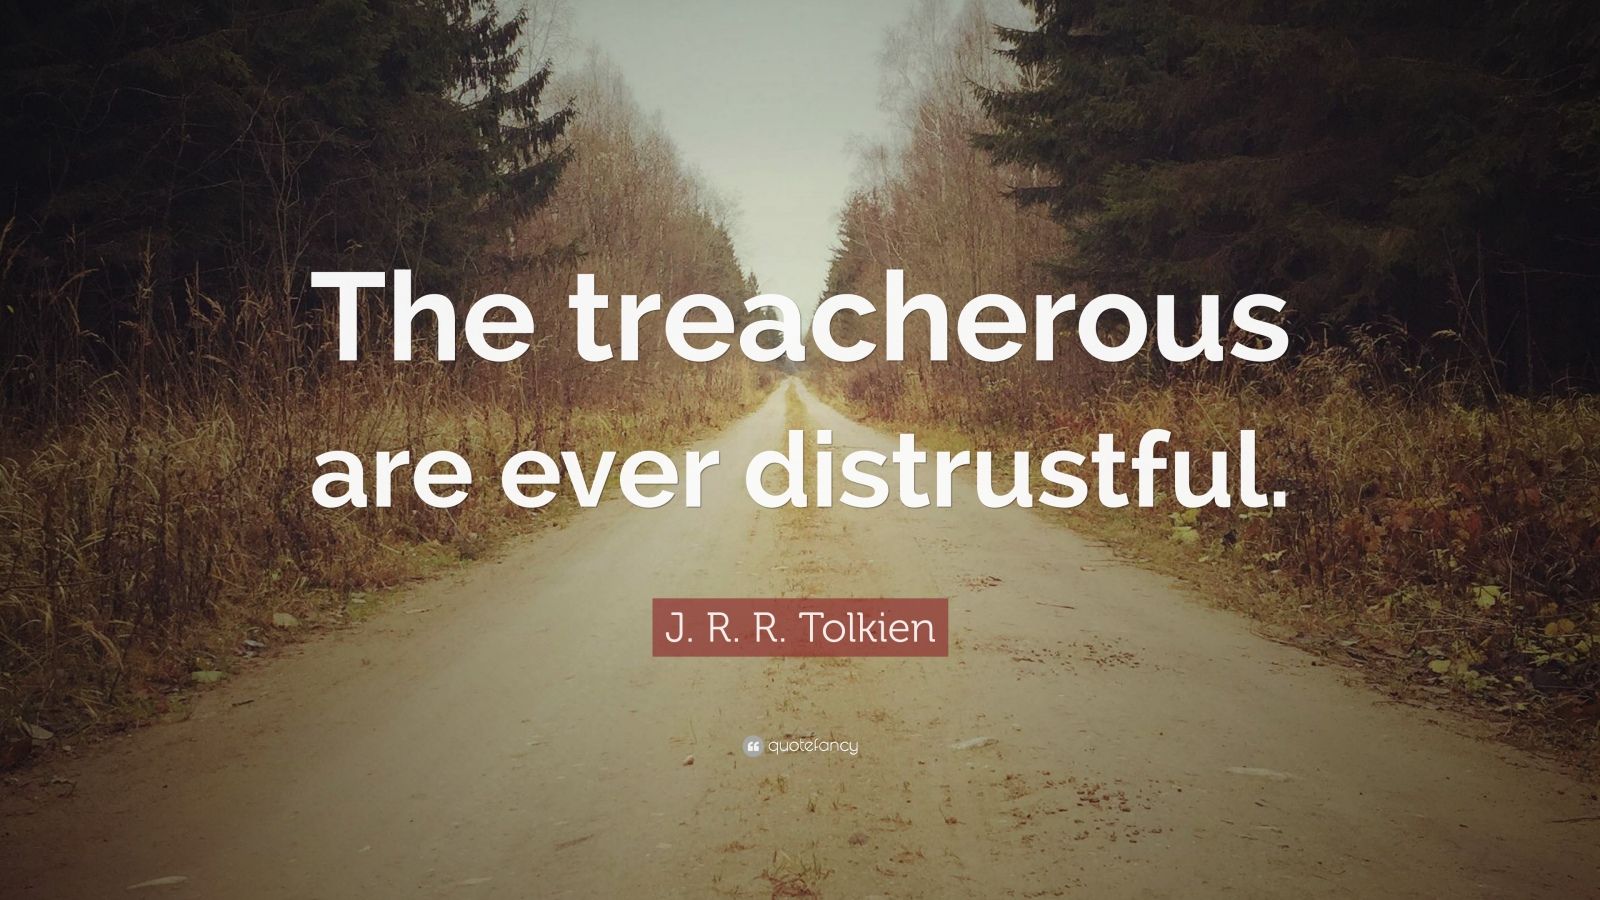 J. R. R. Tolkien Quote “The treacherous are ever distrustful.”